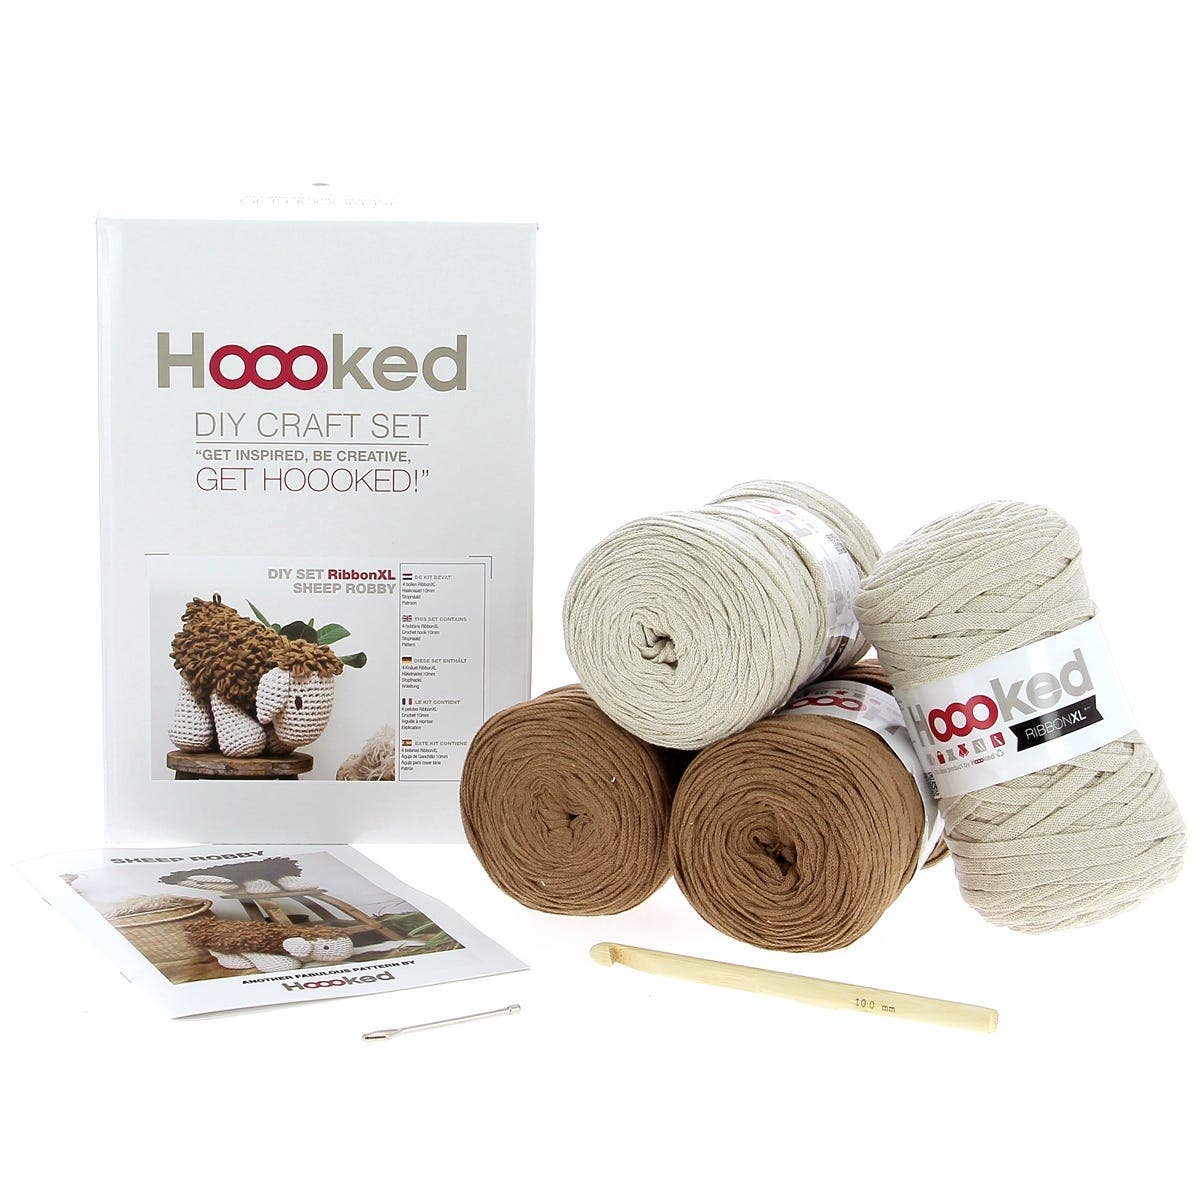 Hoooked Robby the Sheep - Crochet Kit